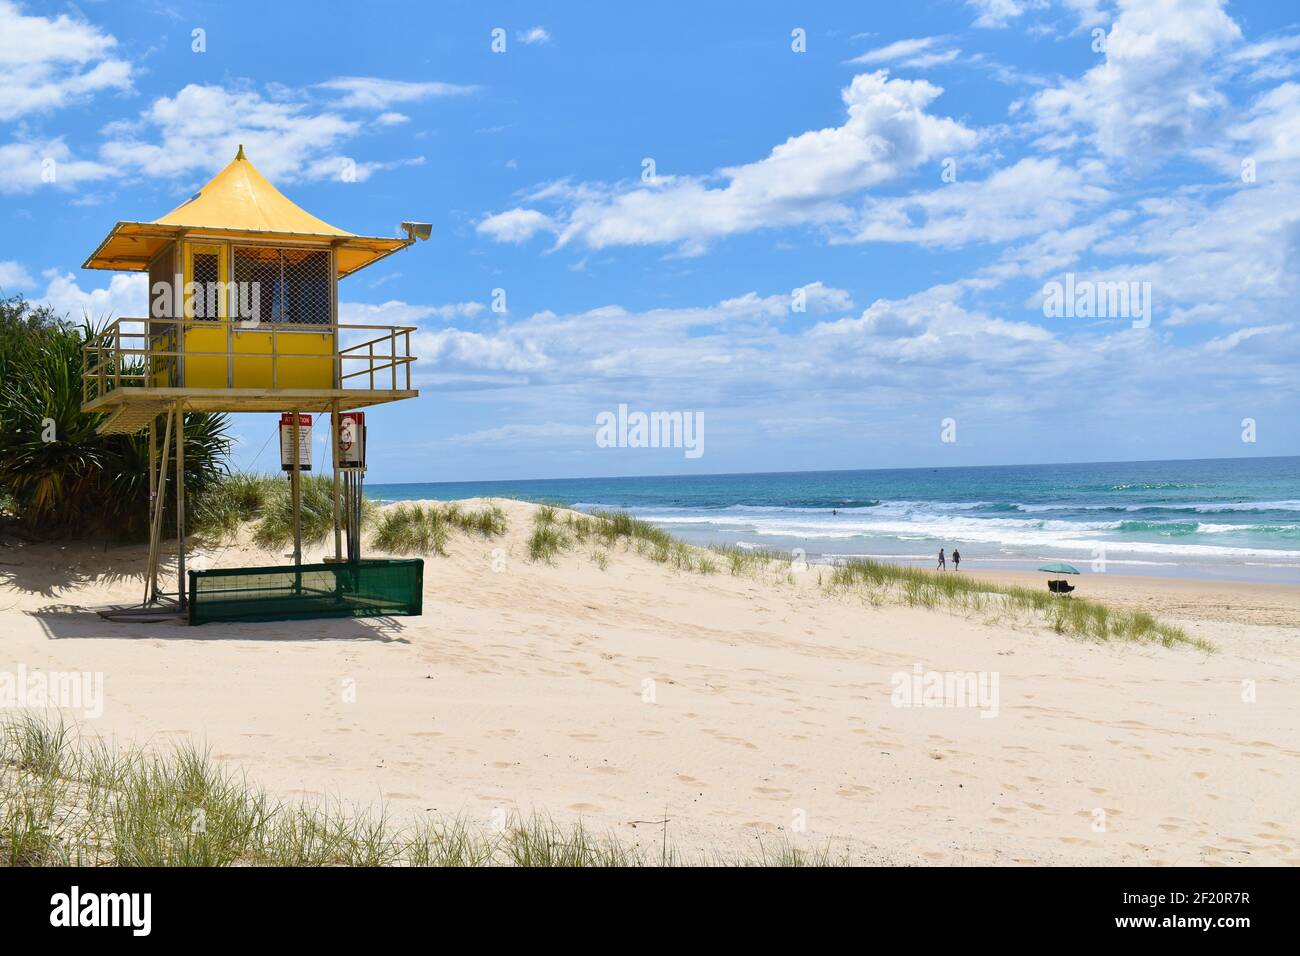 Yellow Lifeguard Surveillance Tower at the Beach Stock Photo